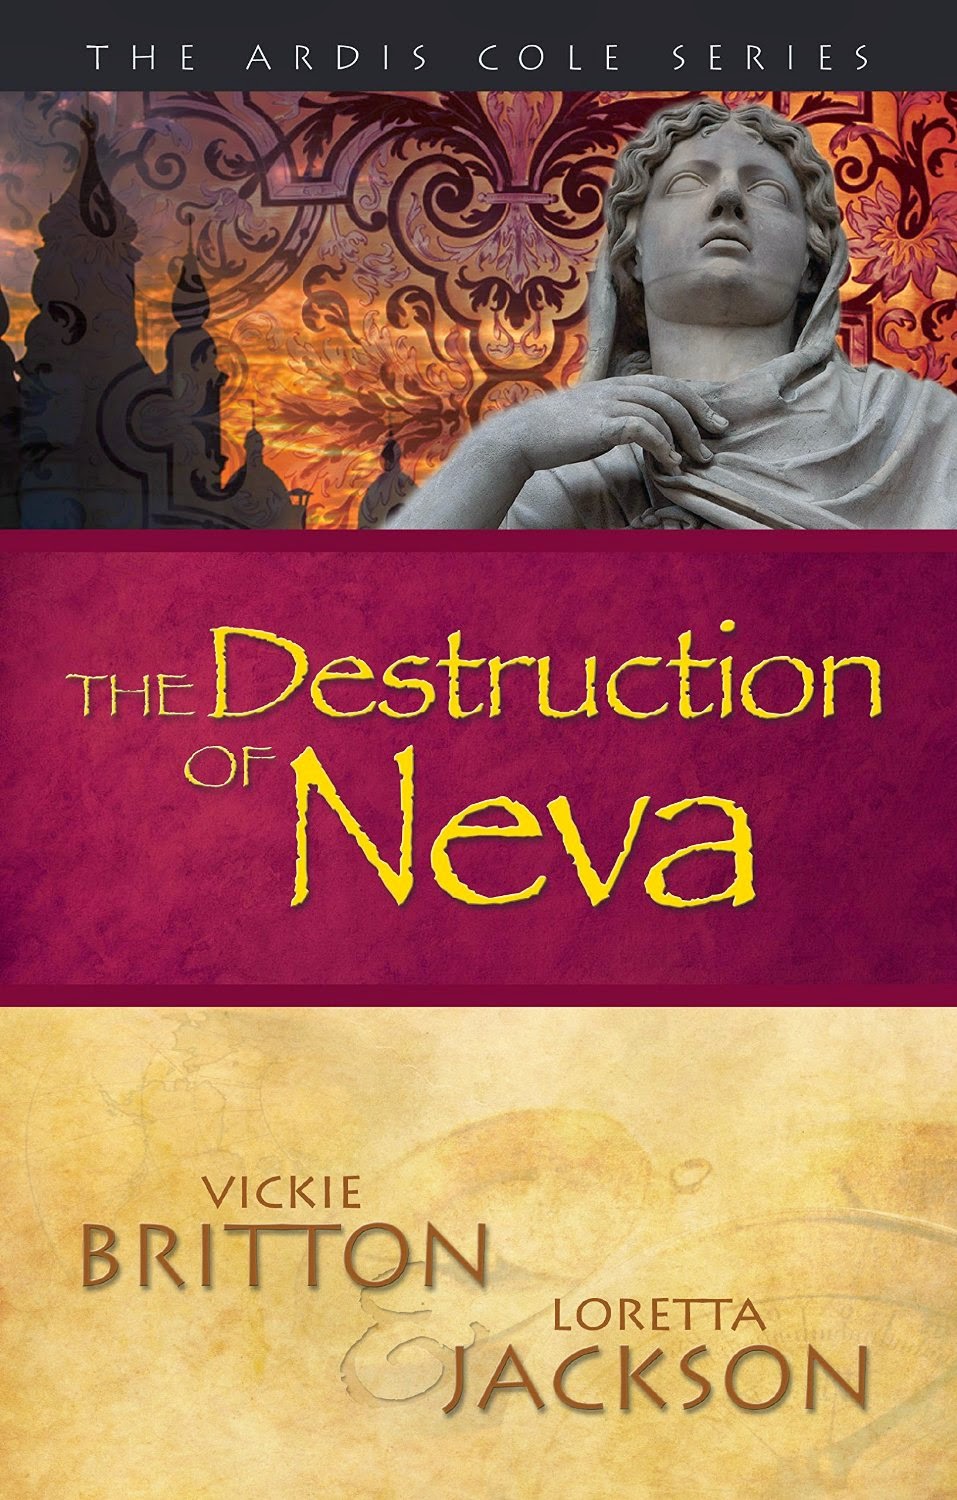 THE DESTRUCTION OF NEVA